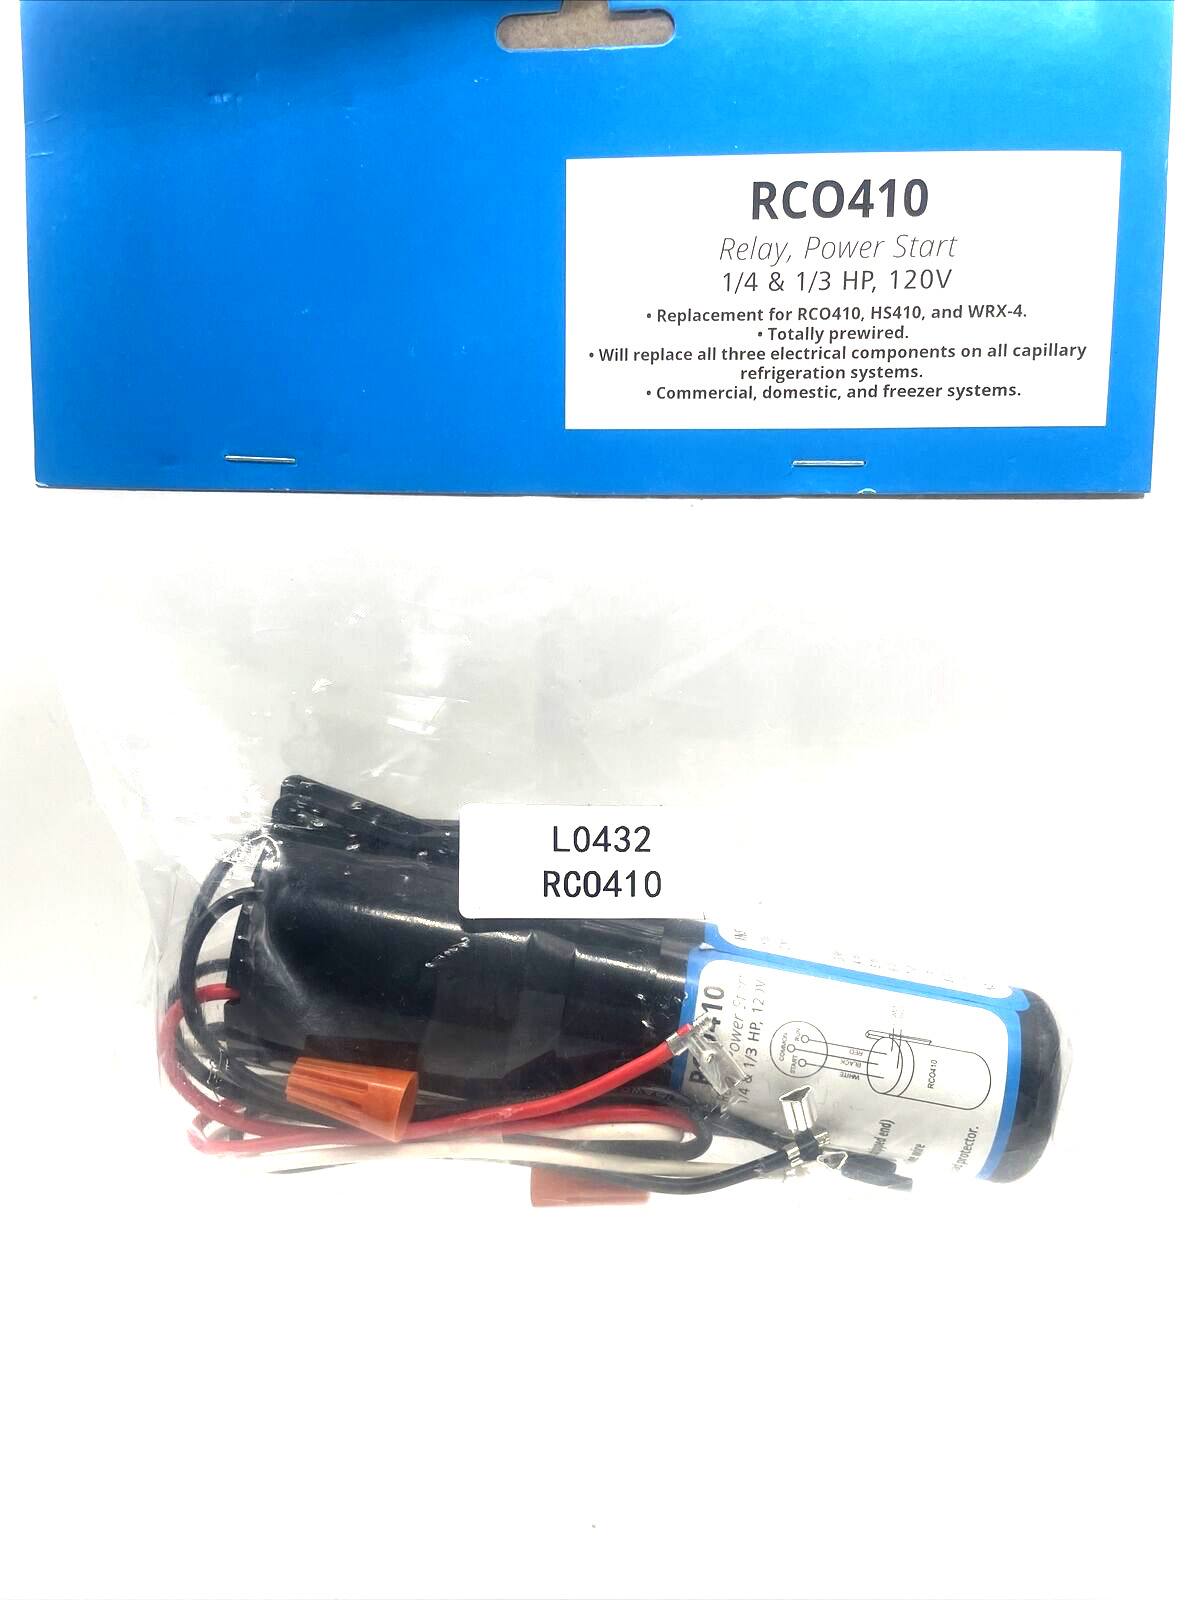 RCO410 3 in 1 Compressor Hard Start Capacitor Kit for Refrigerators & Freezers 